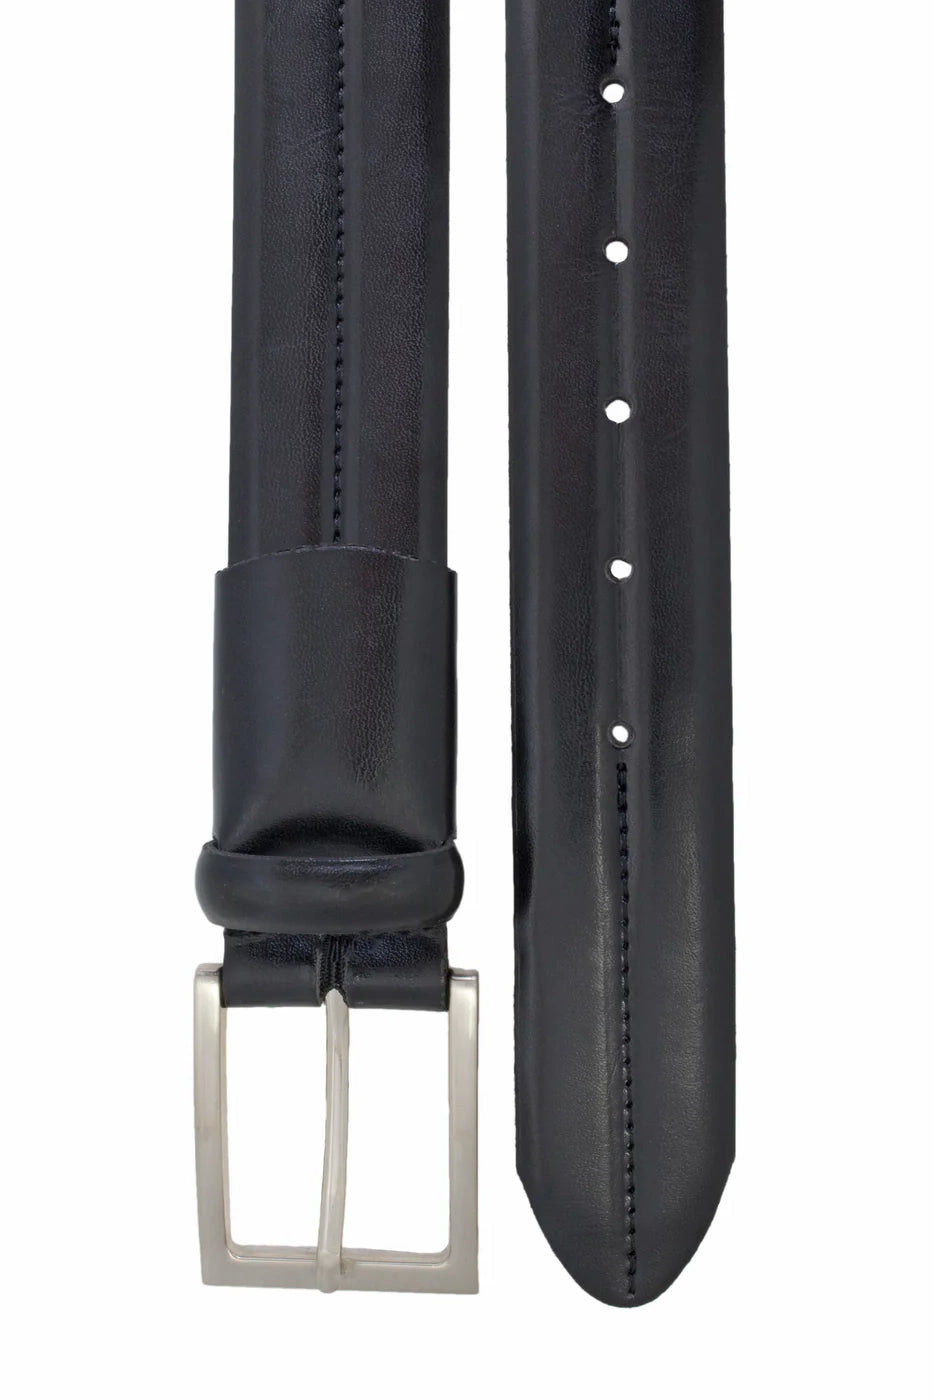 Extensible Custom Leather Belt in Black color